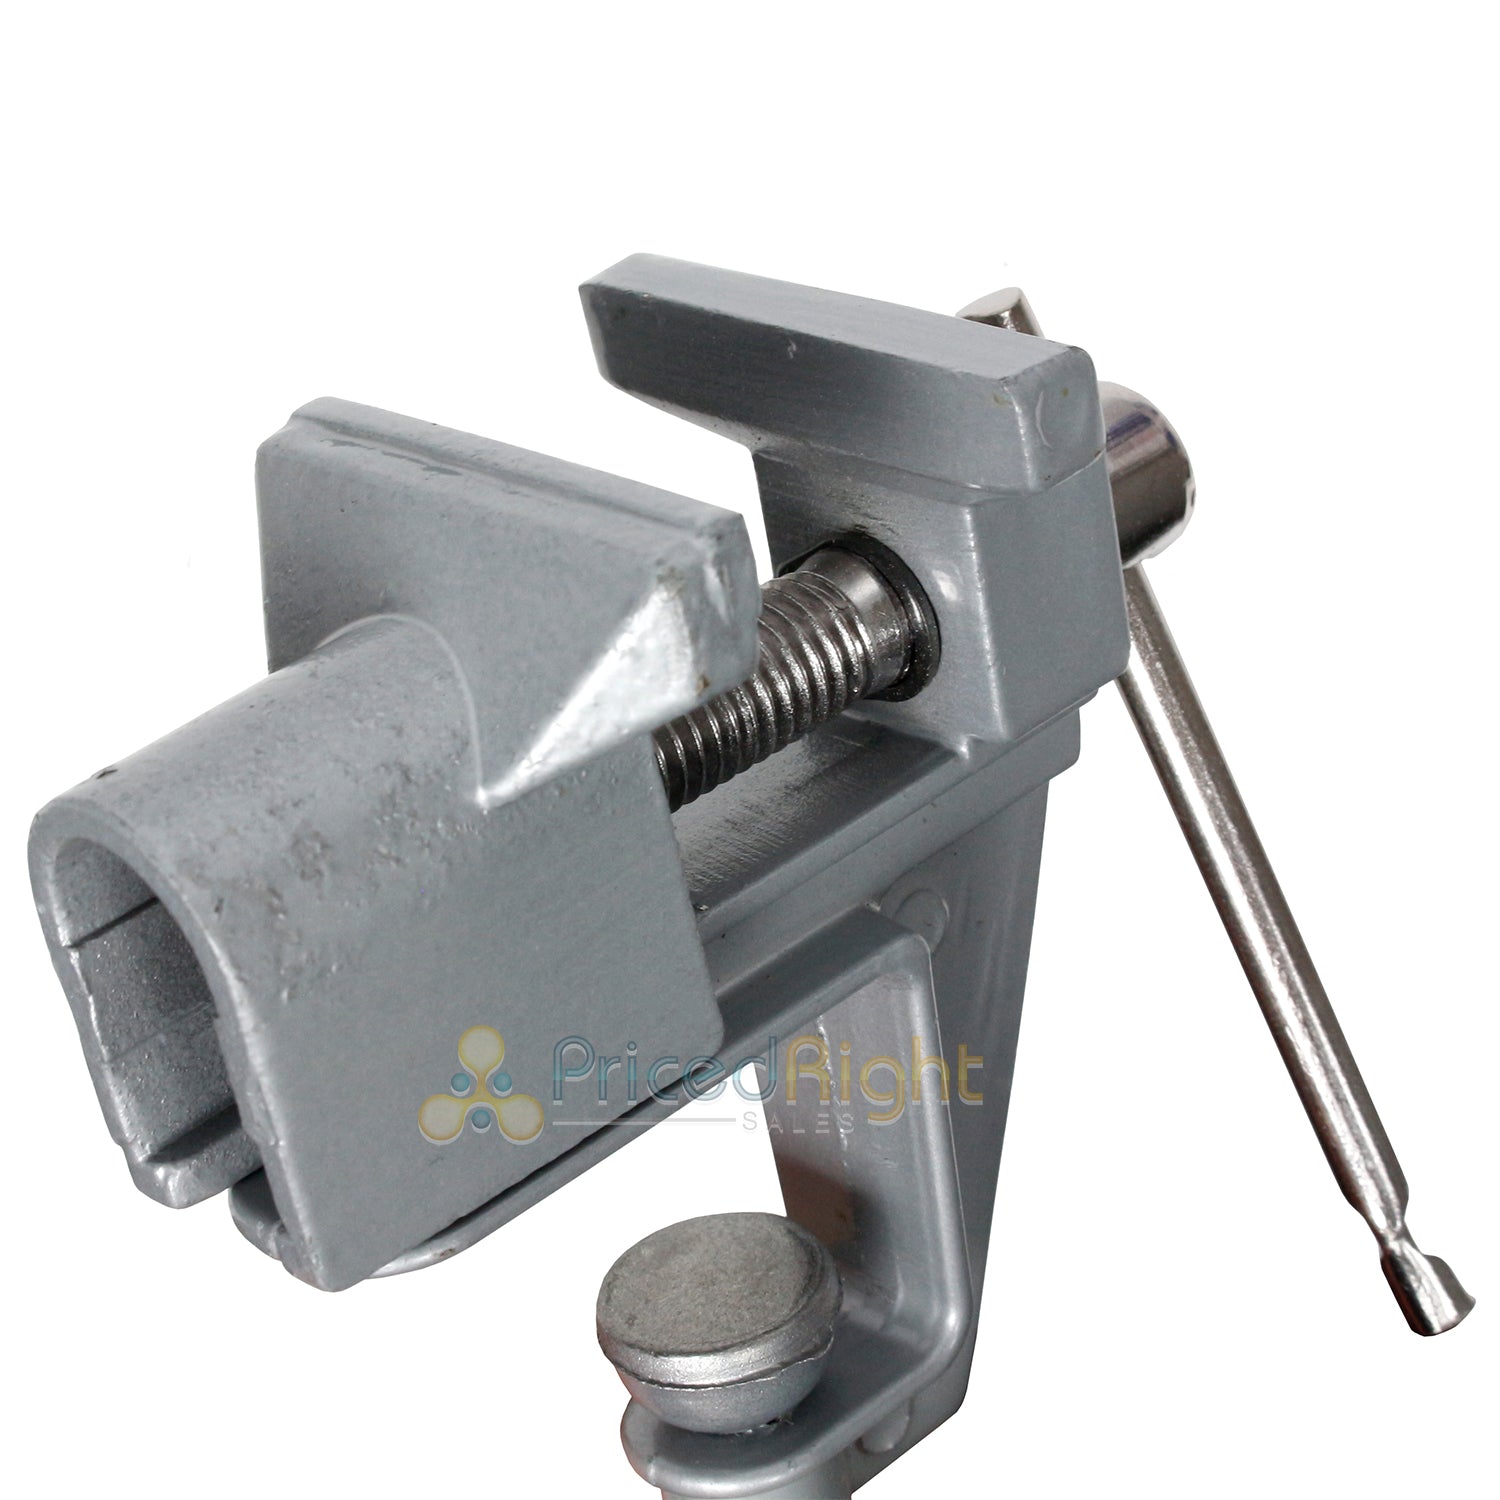 Mini Table Vise Swivel Lock Clamp Bench Craft Hobby Tool Cast Aluminum 29520